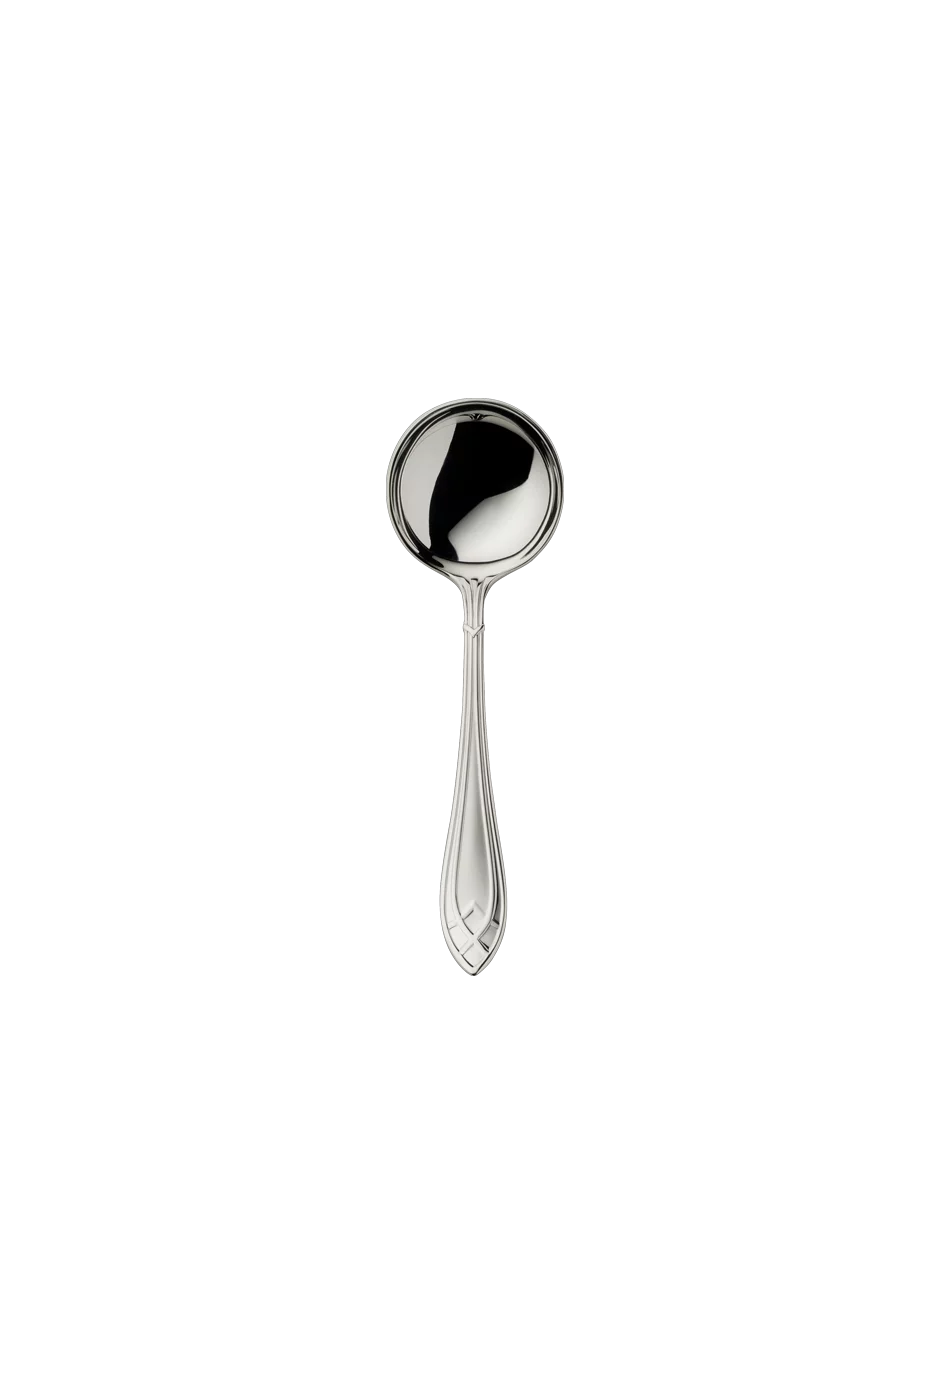 Arcade Sugar Spoon (150g massive silverplated)